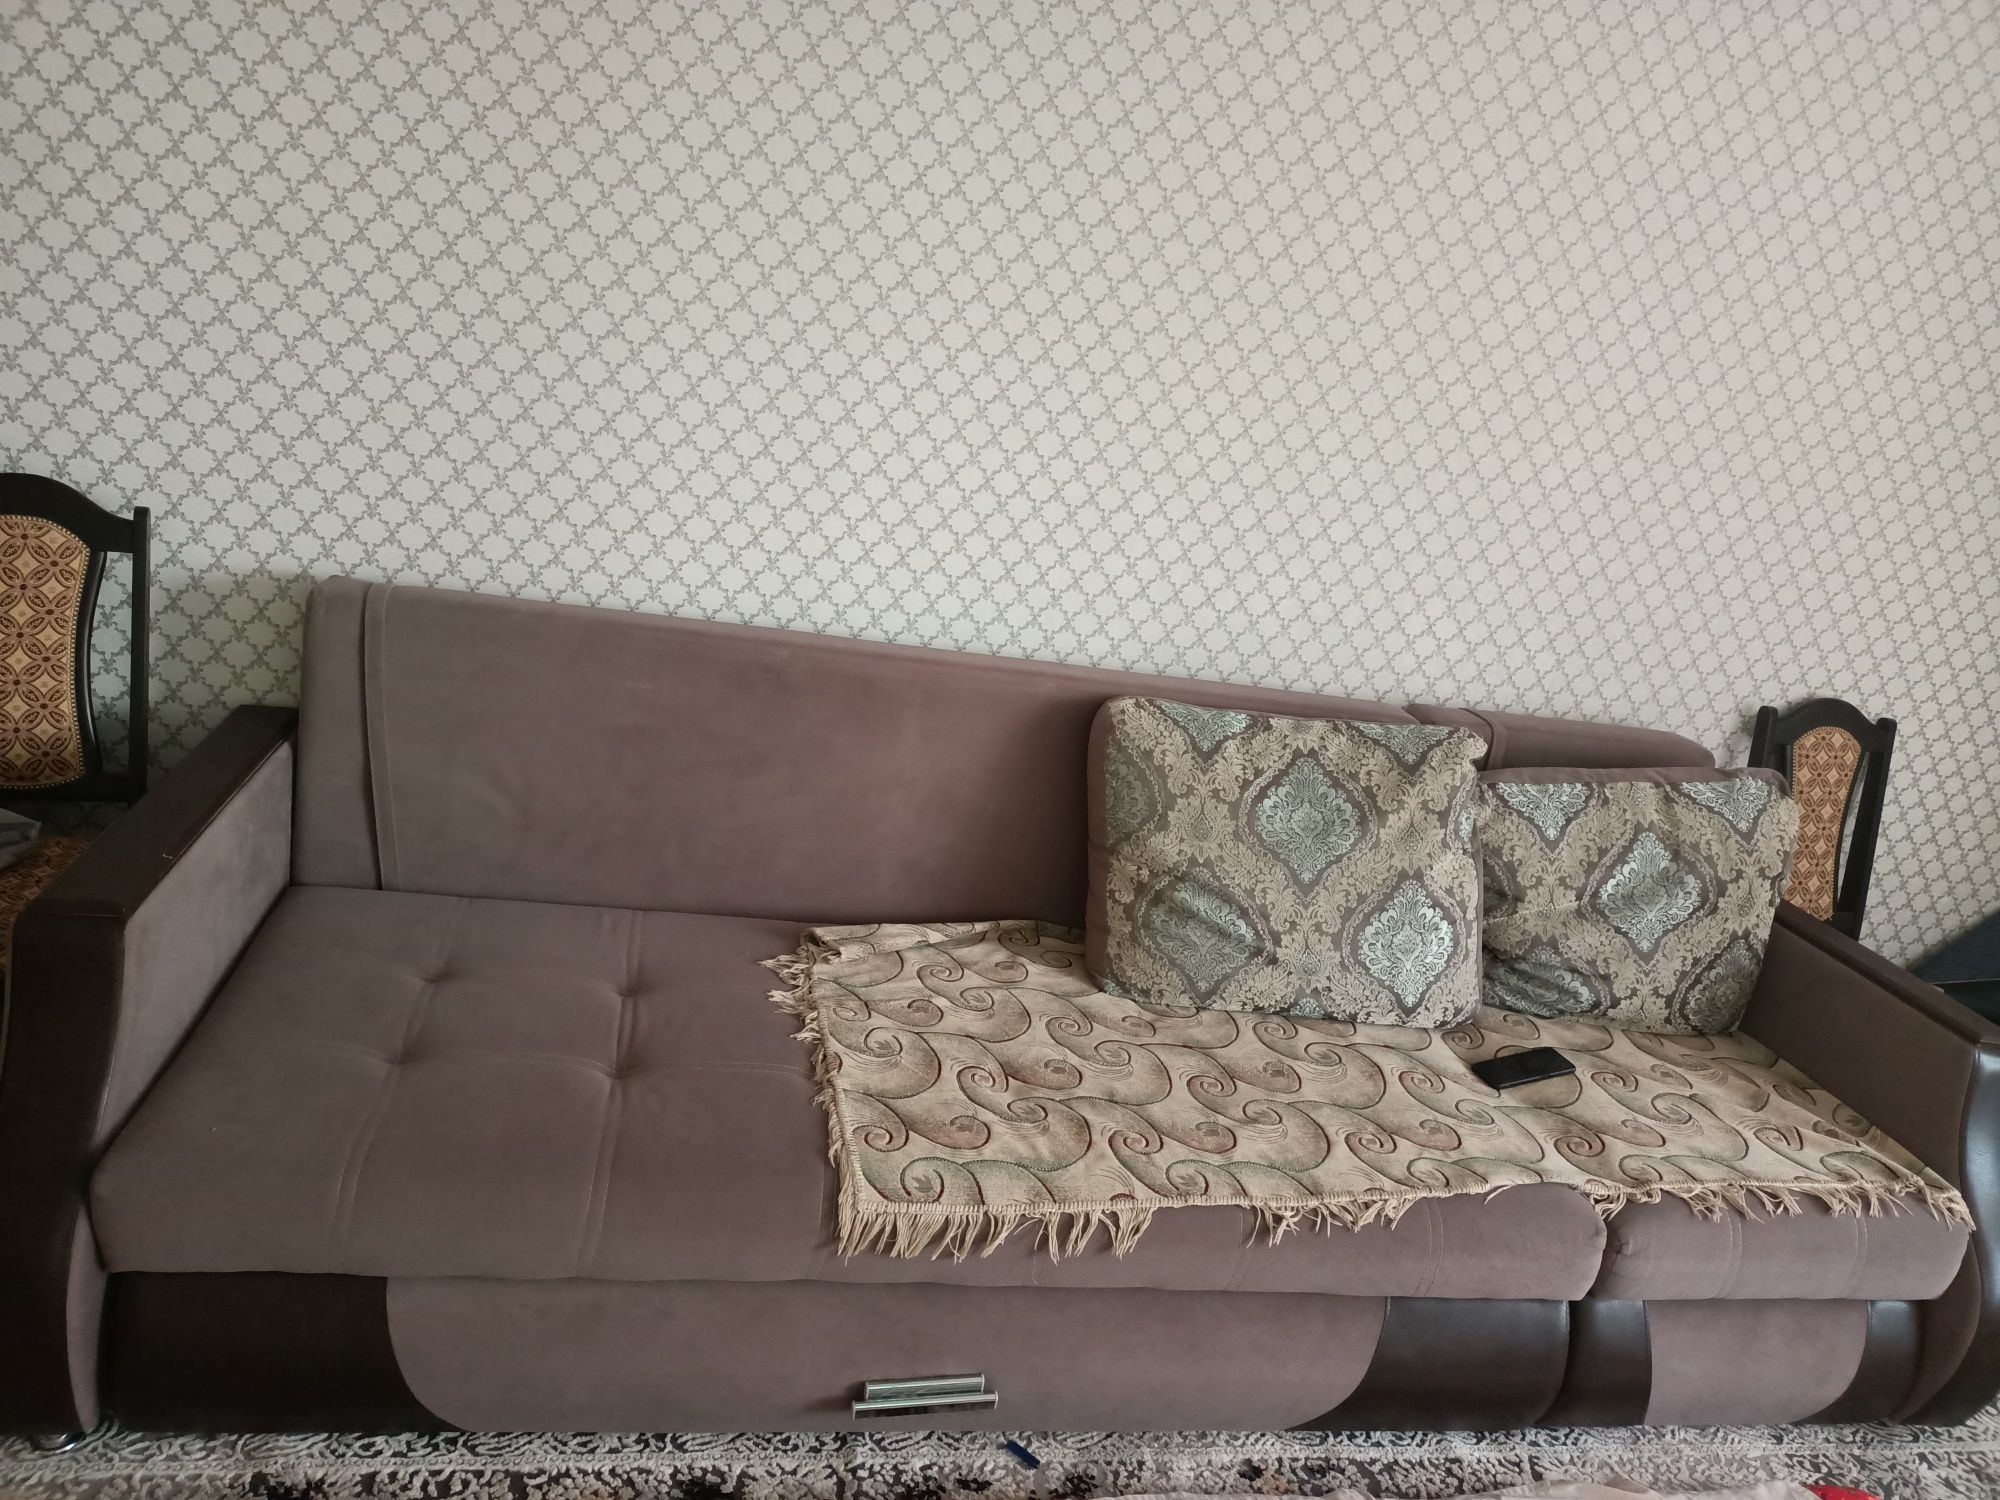 Мягкая мебель, диван